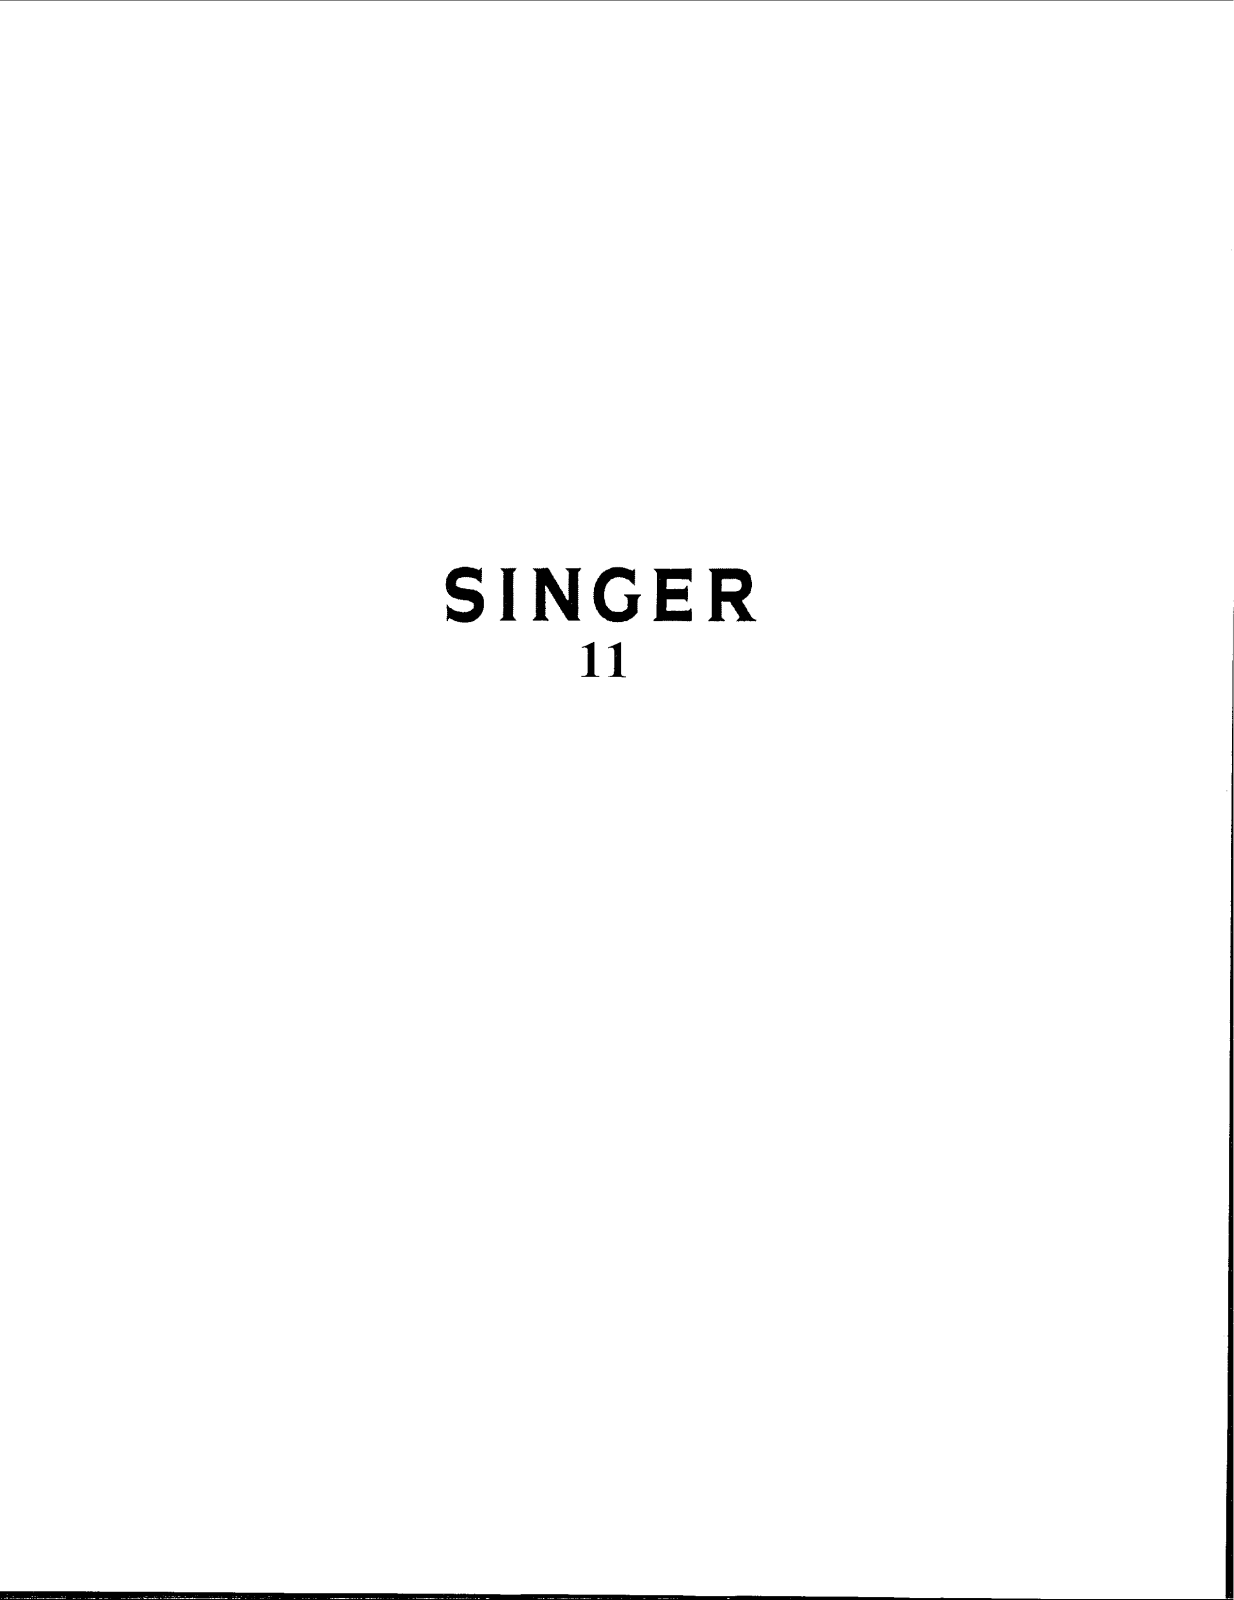 Singer 11-26, 11-25, 11-22, 11-23, 11-24 User Manual